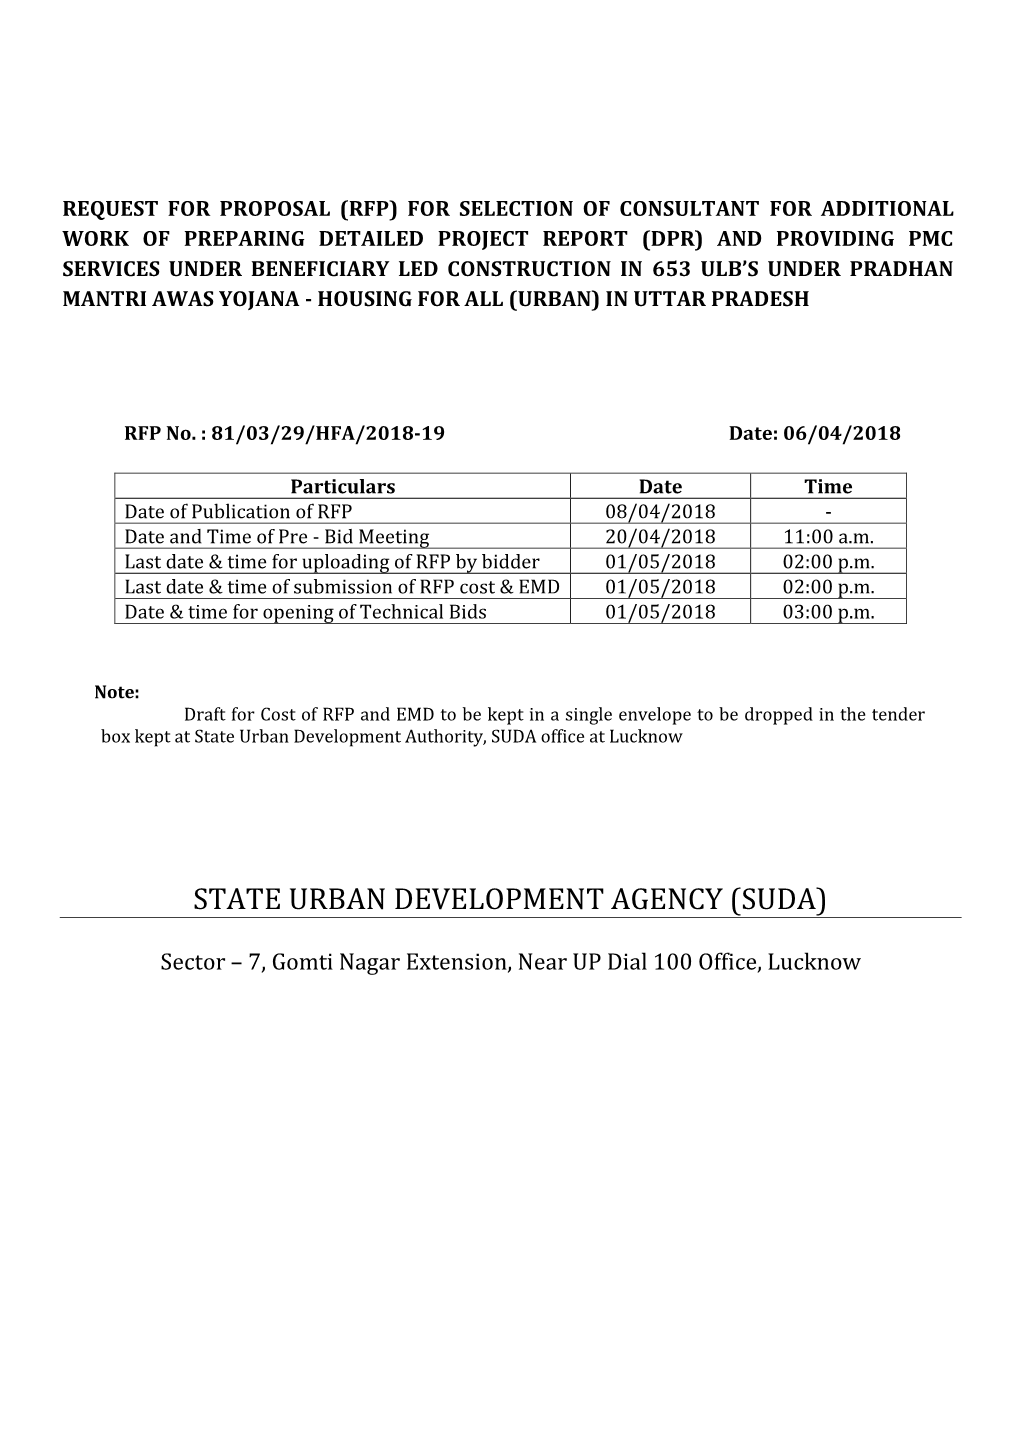 State Urban Development Agency (Suda)